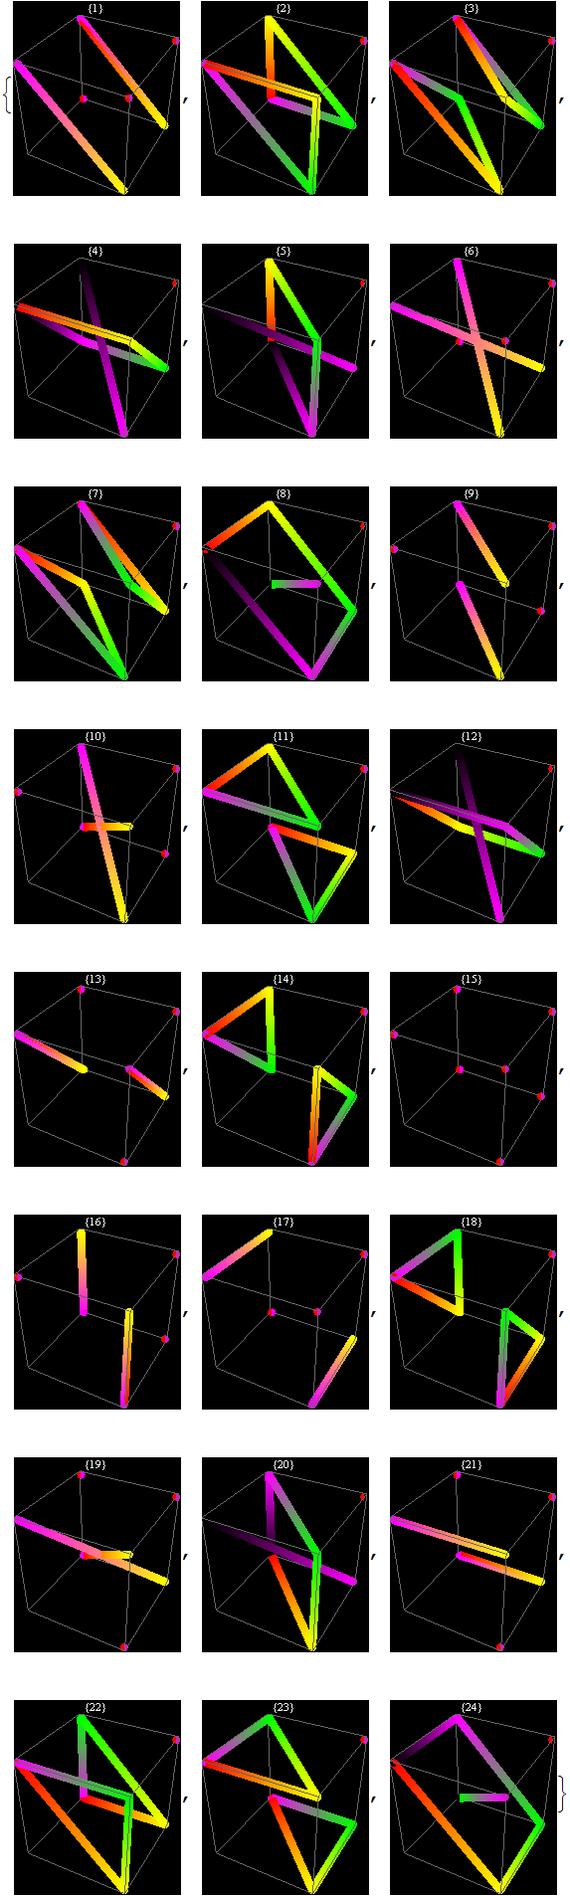 Fano projective plane subgroup order 24 orbits